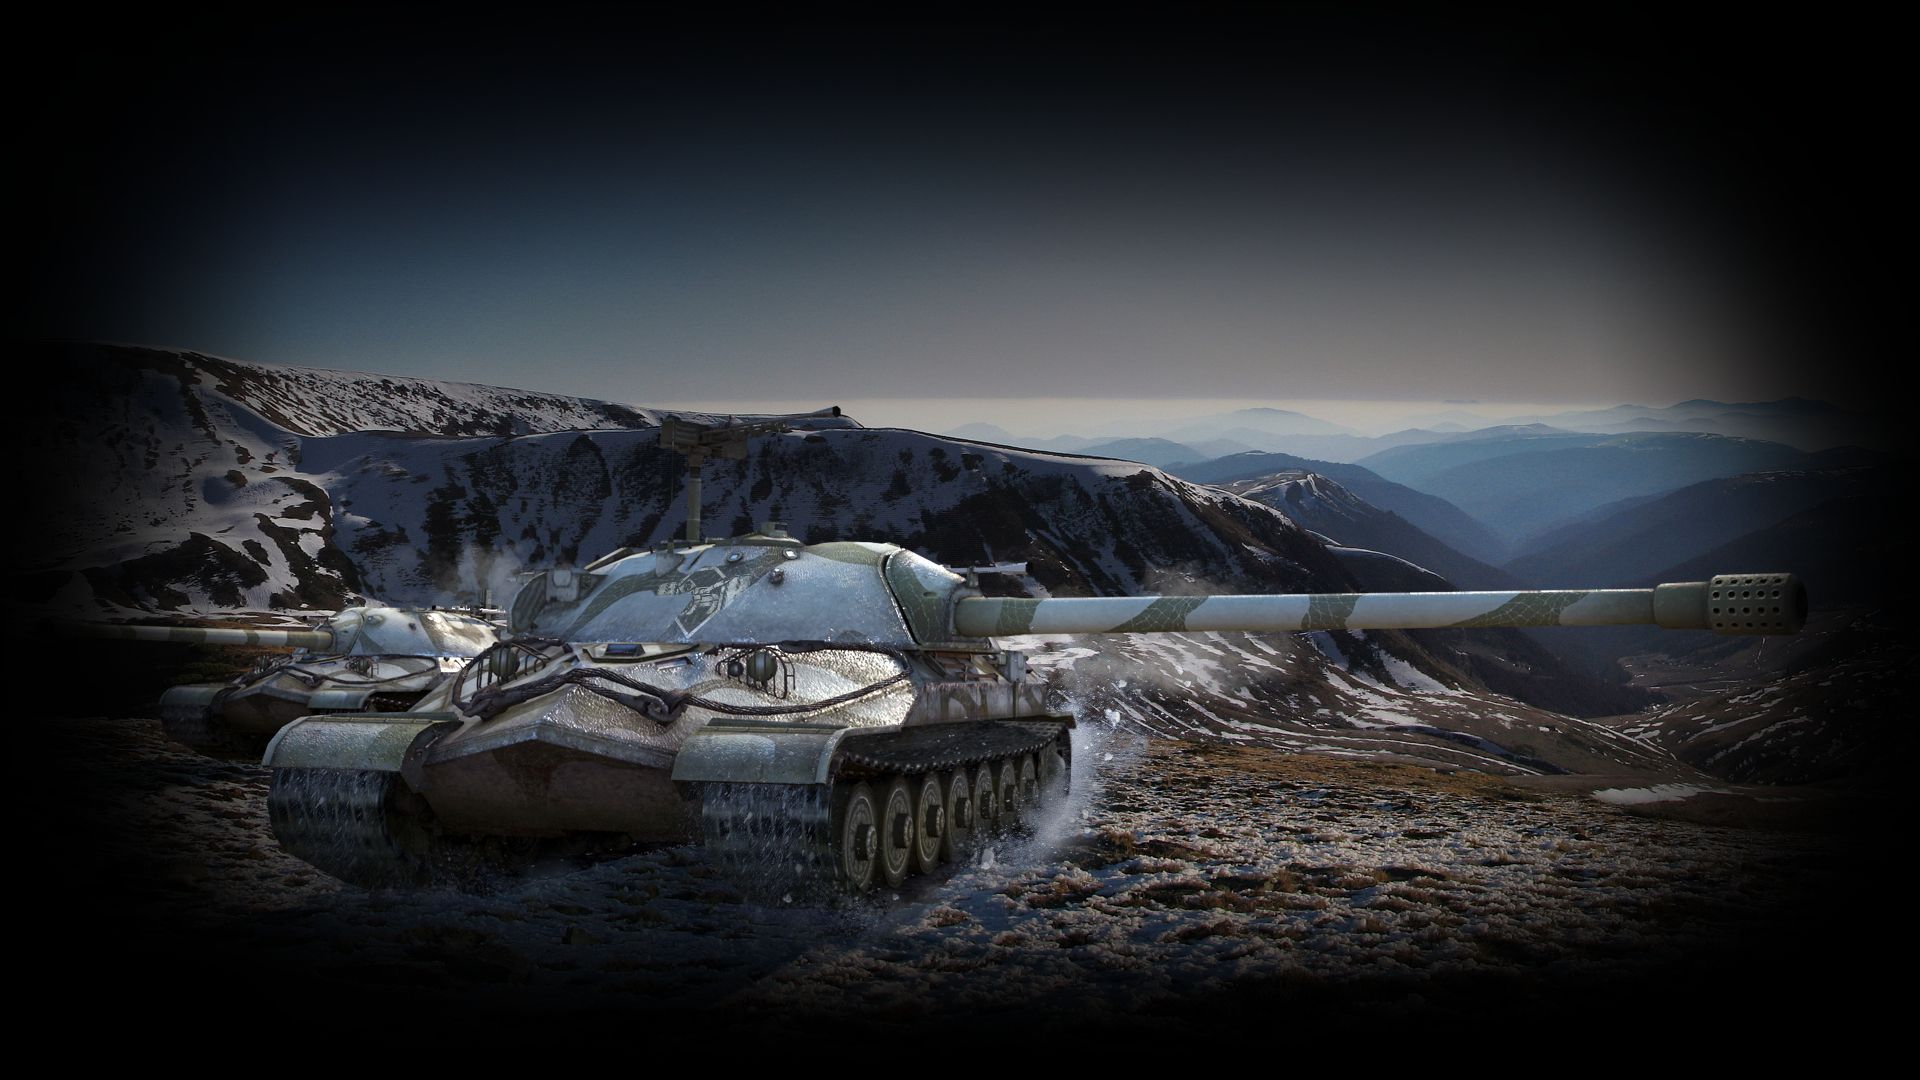 ИС-7 World of Tanks